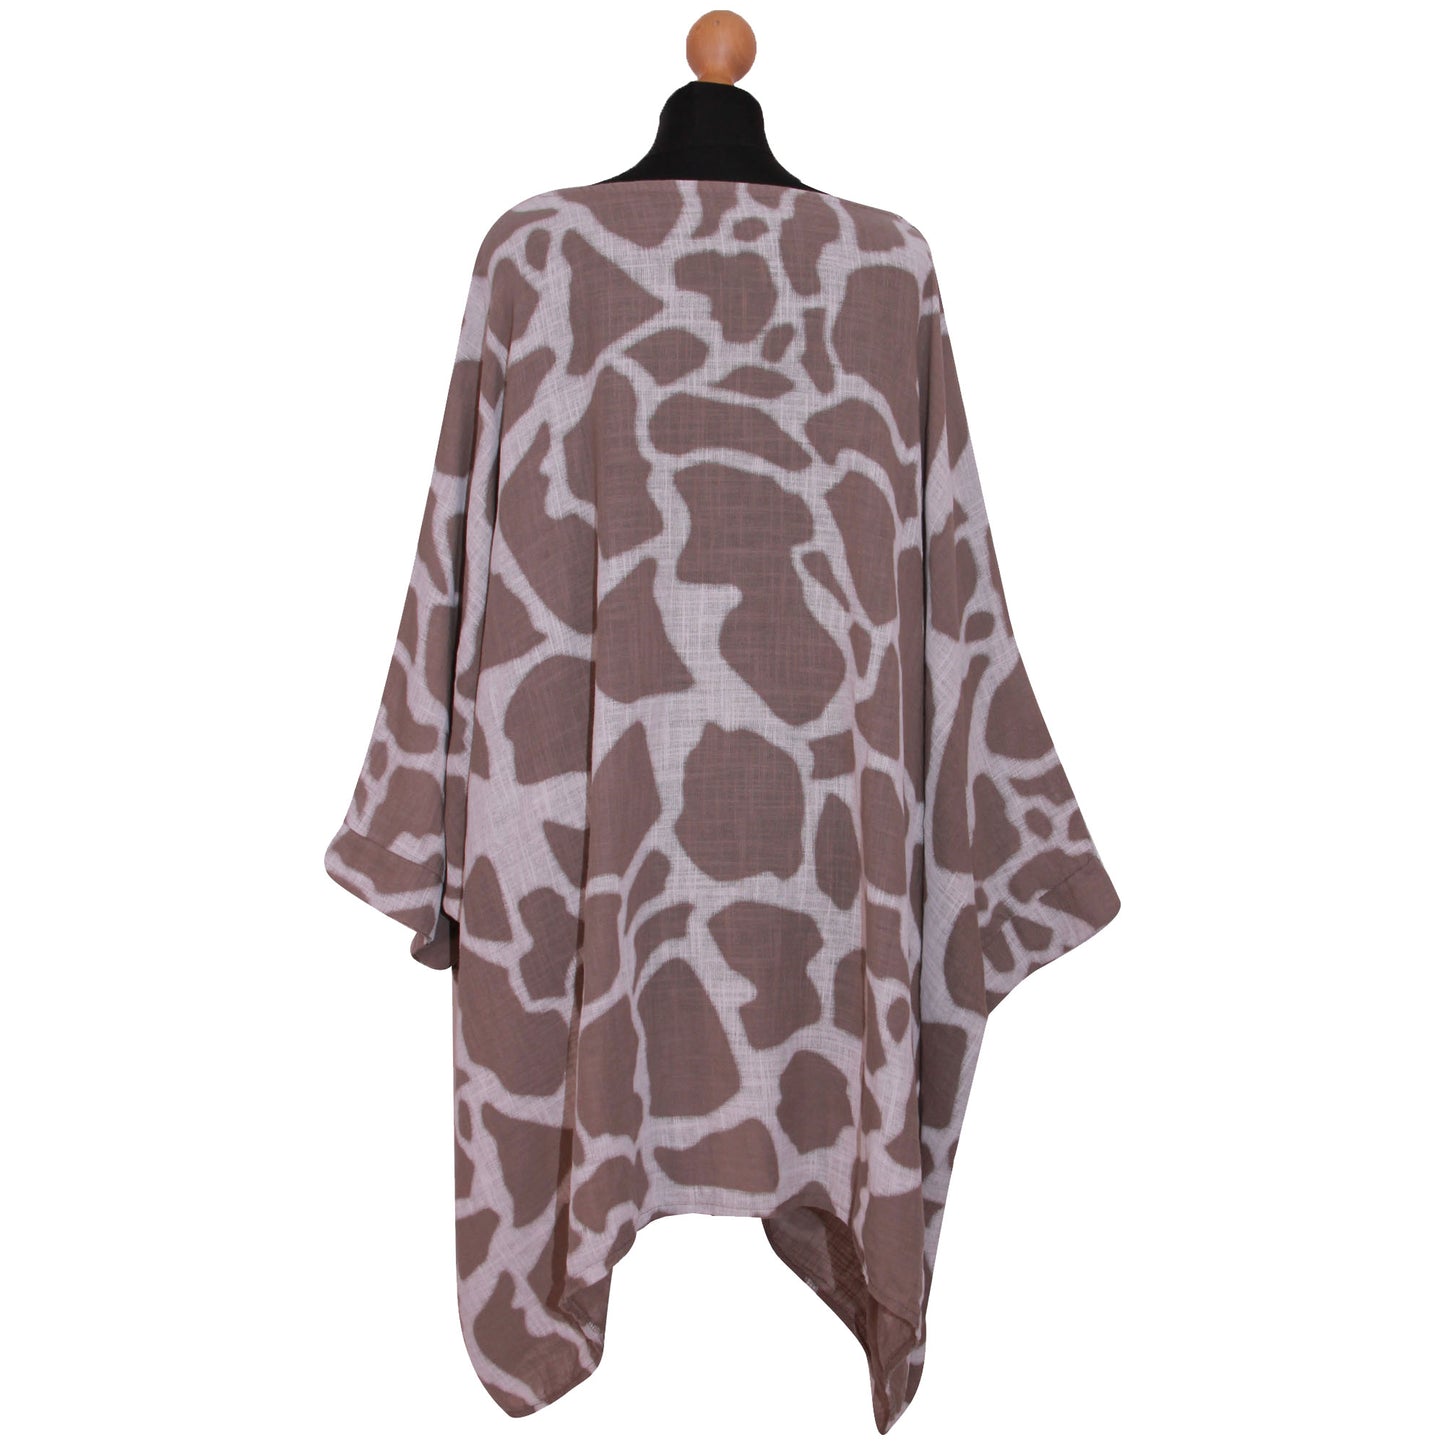 Giraffe dierenprint dames top met print: stijlvolle en trendy damesmode